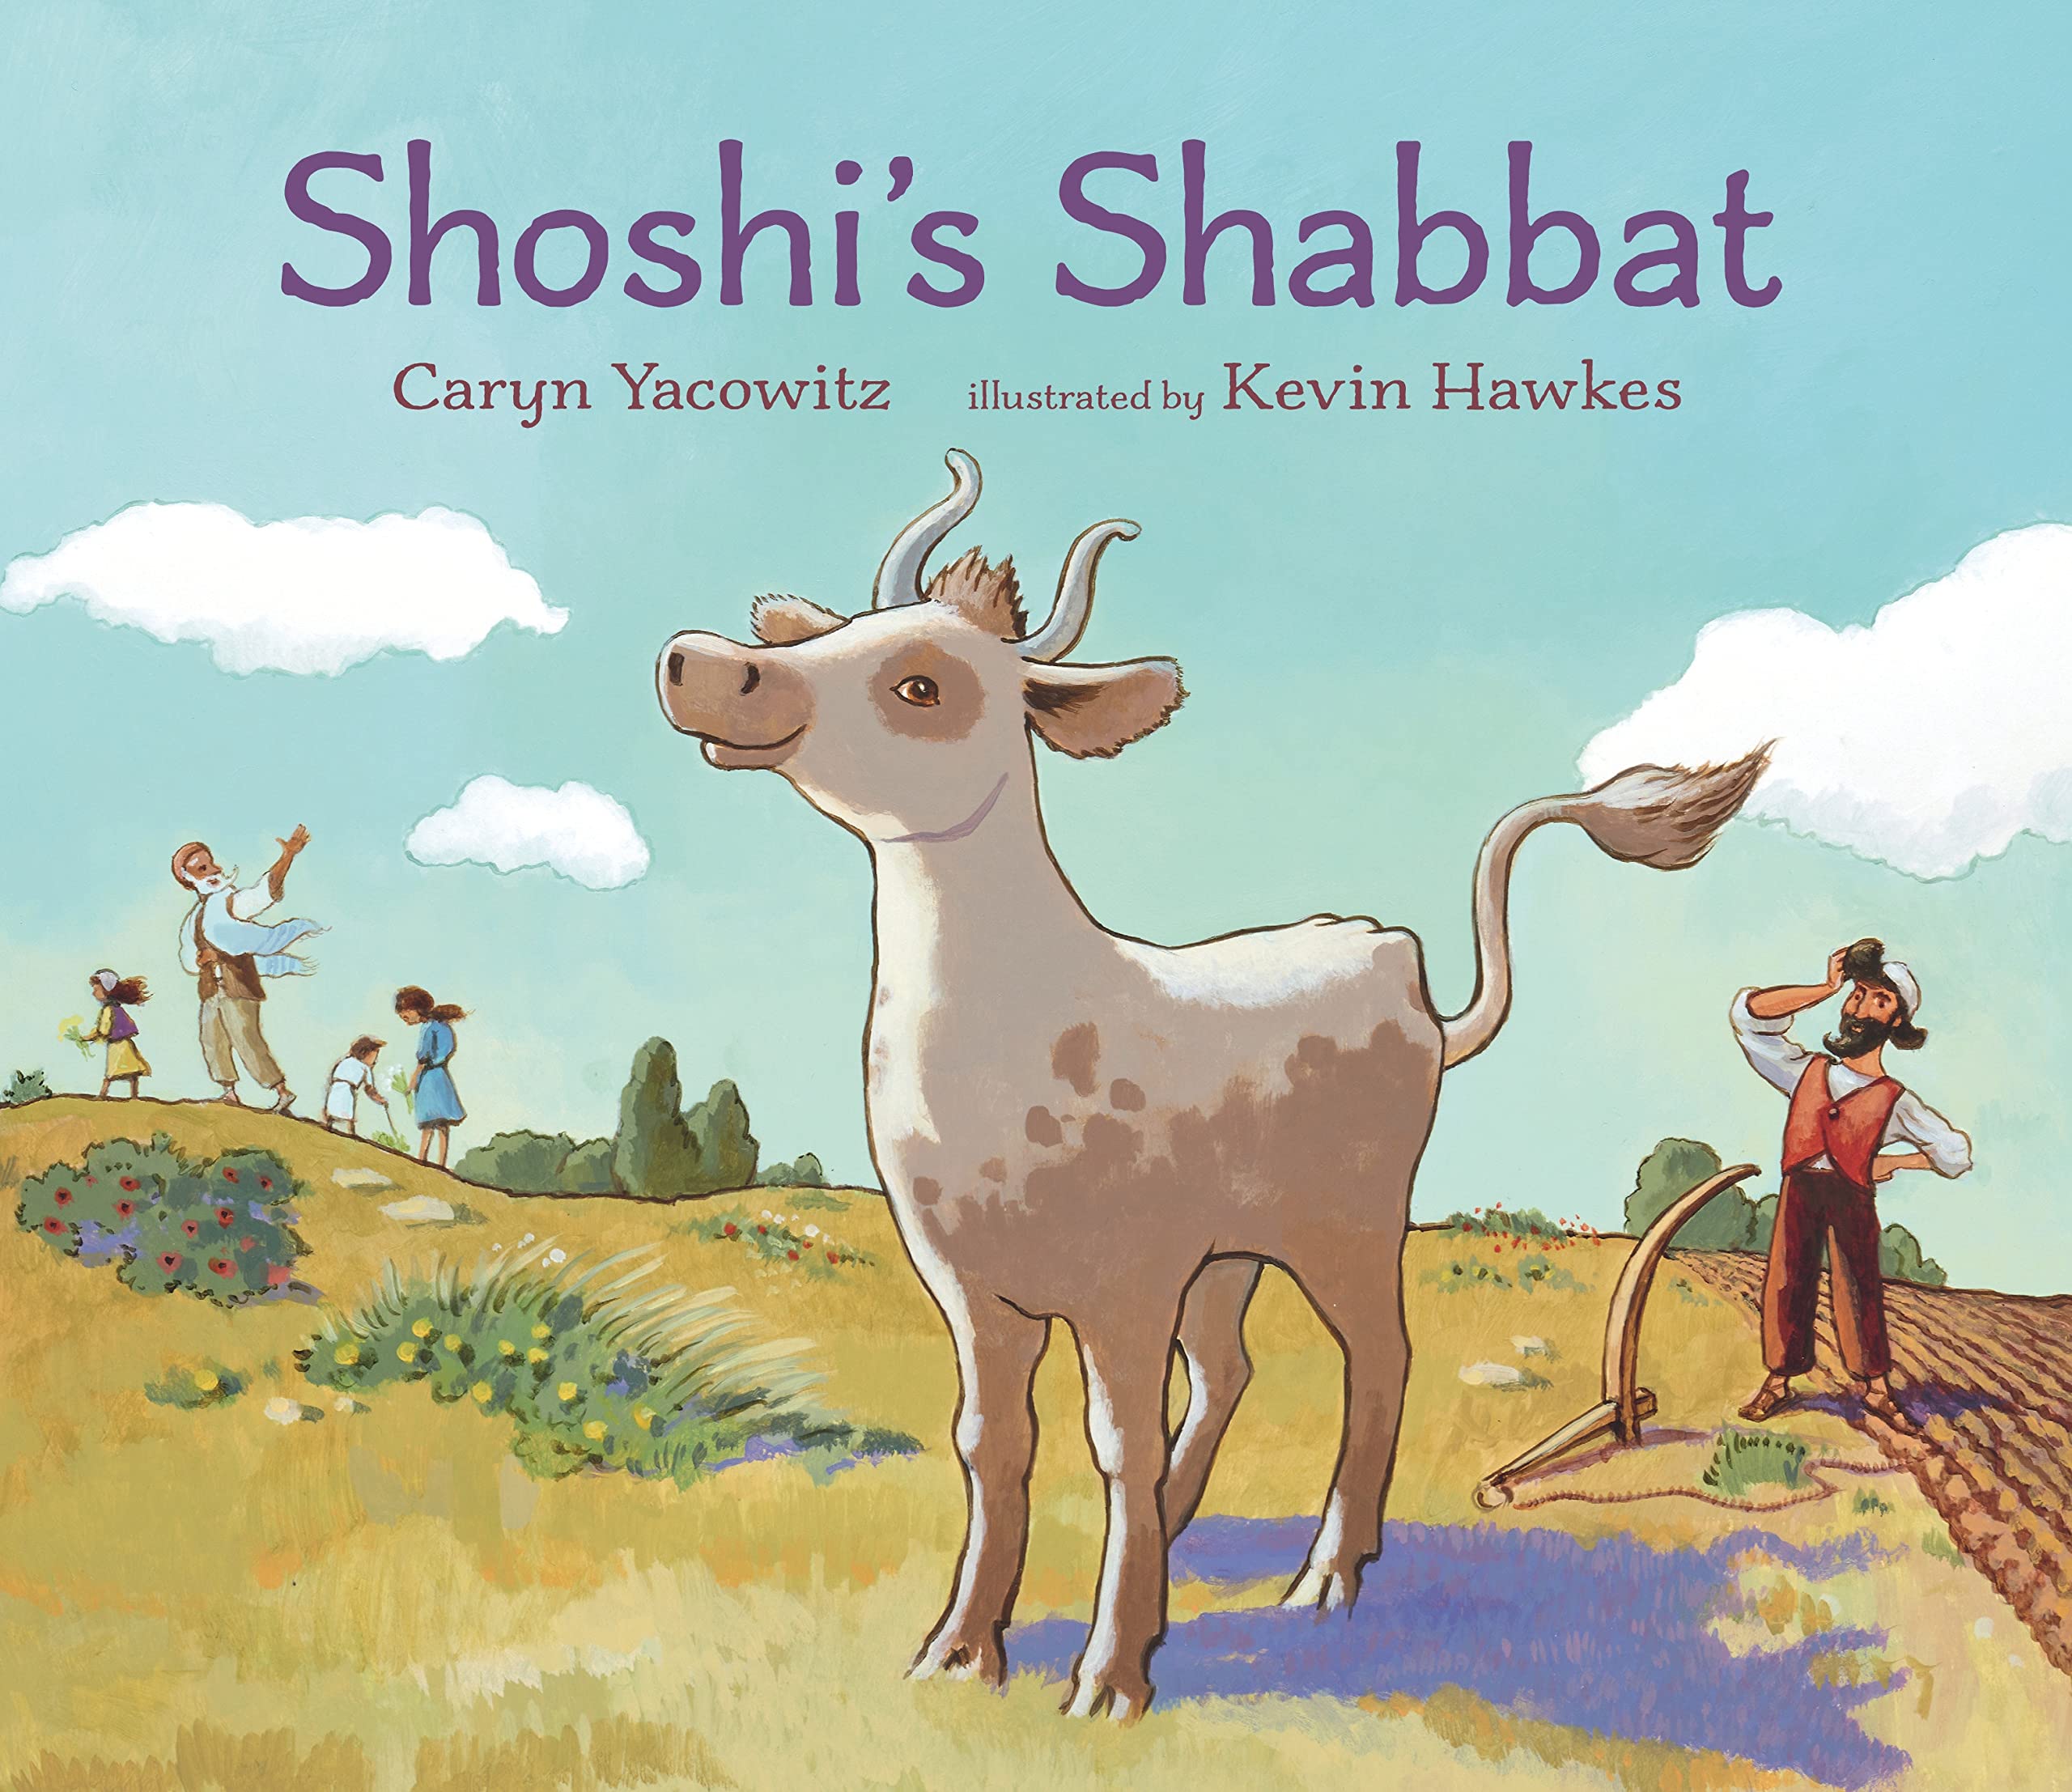 Shoshi’s Shabbat